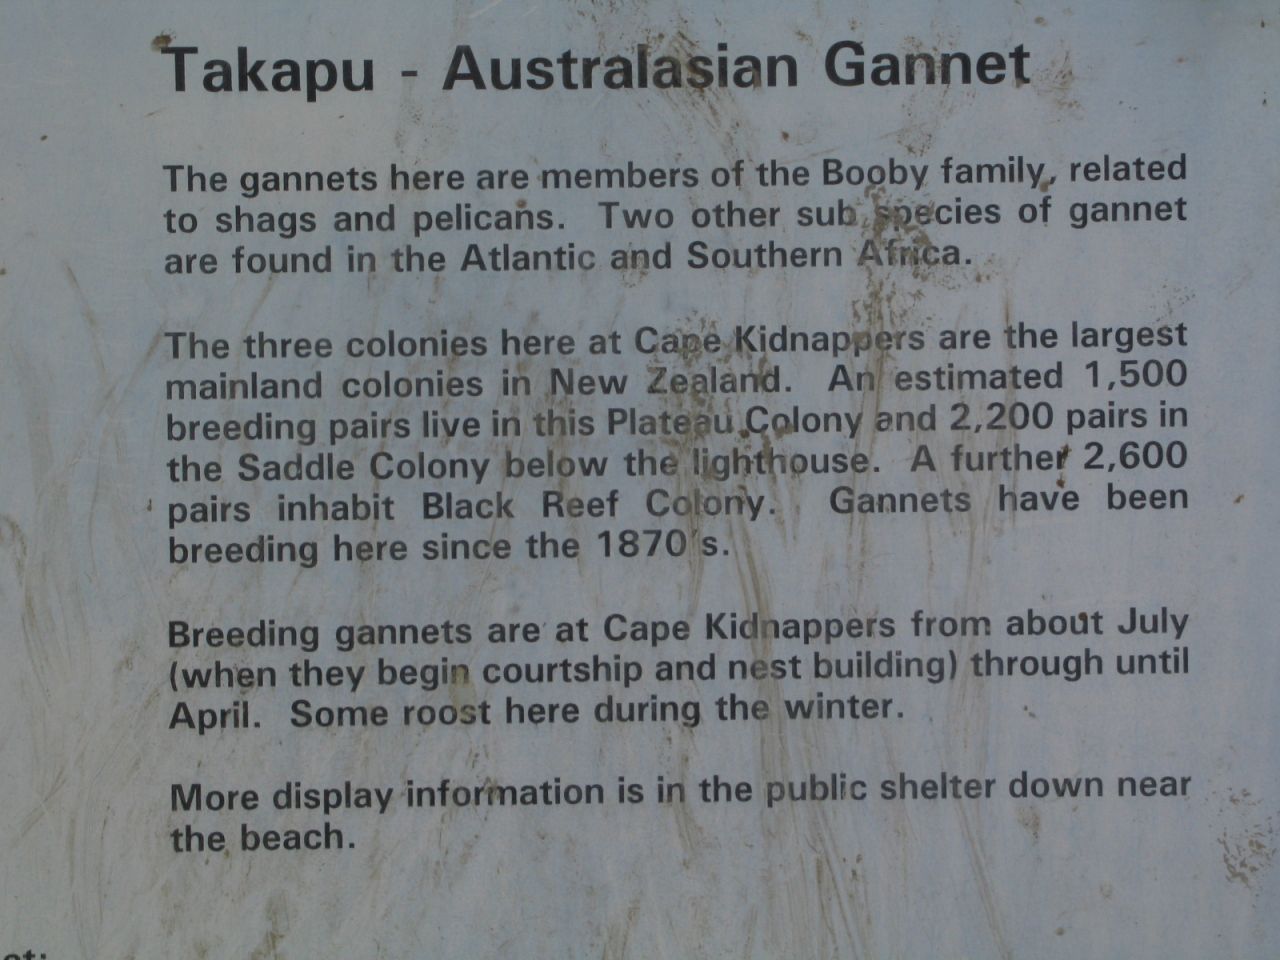 fotka / image kolonie tereju na Cape Kidnappers, New Zealand